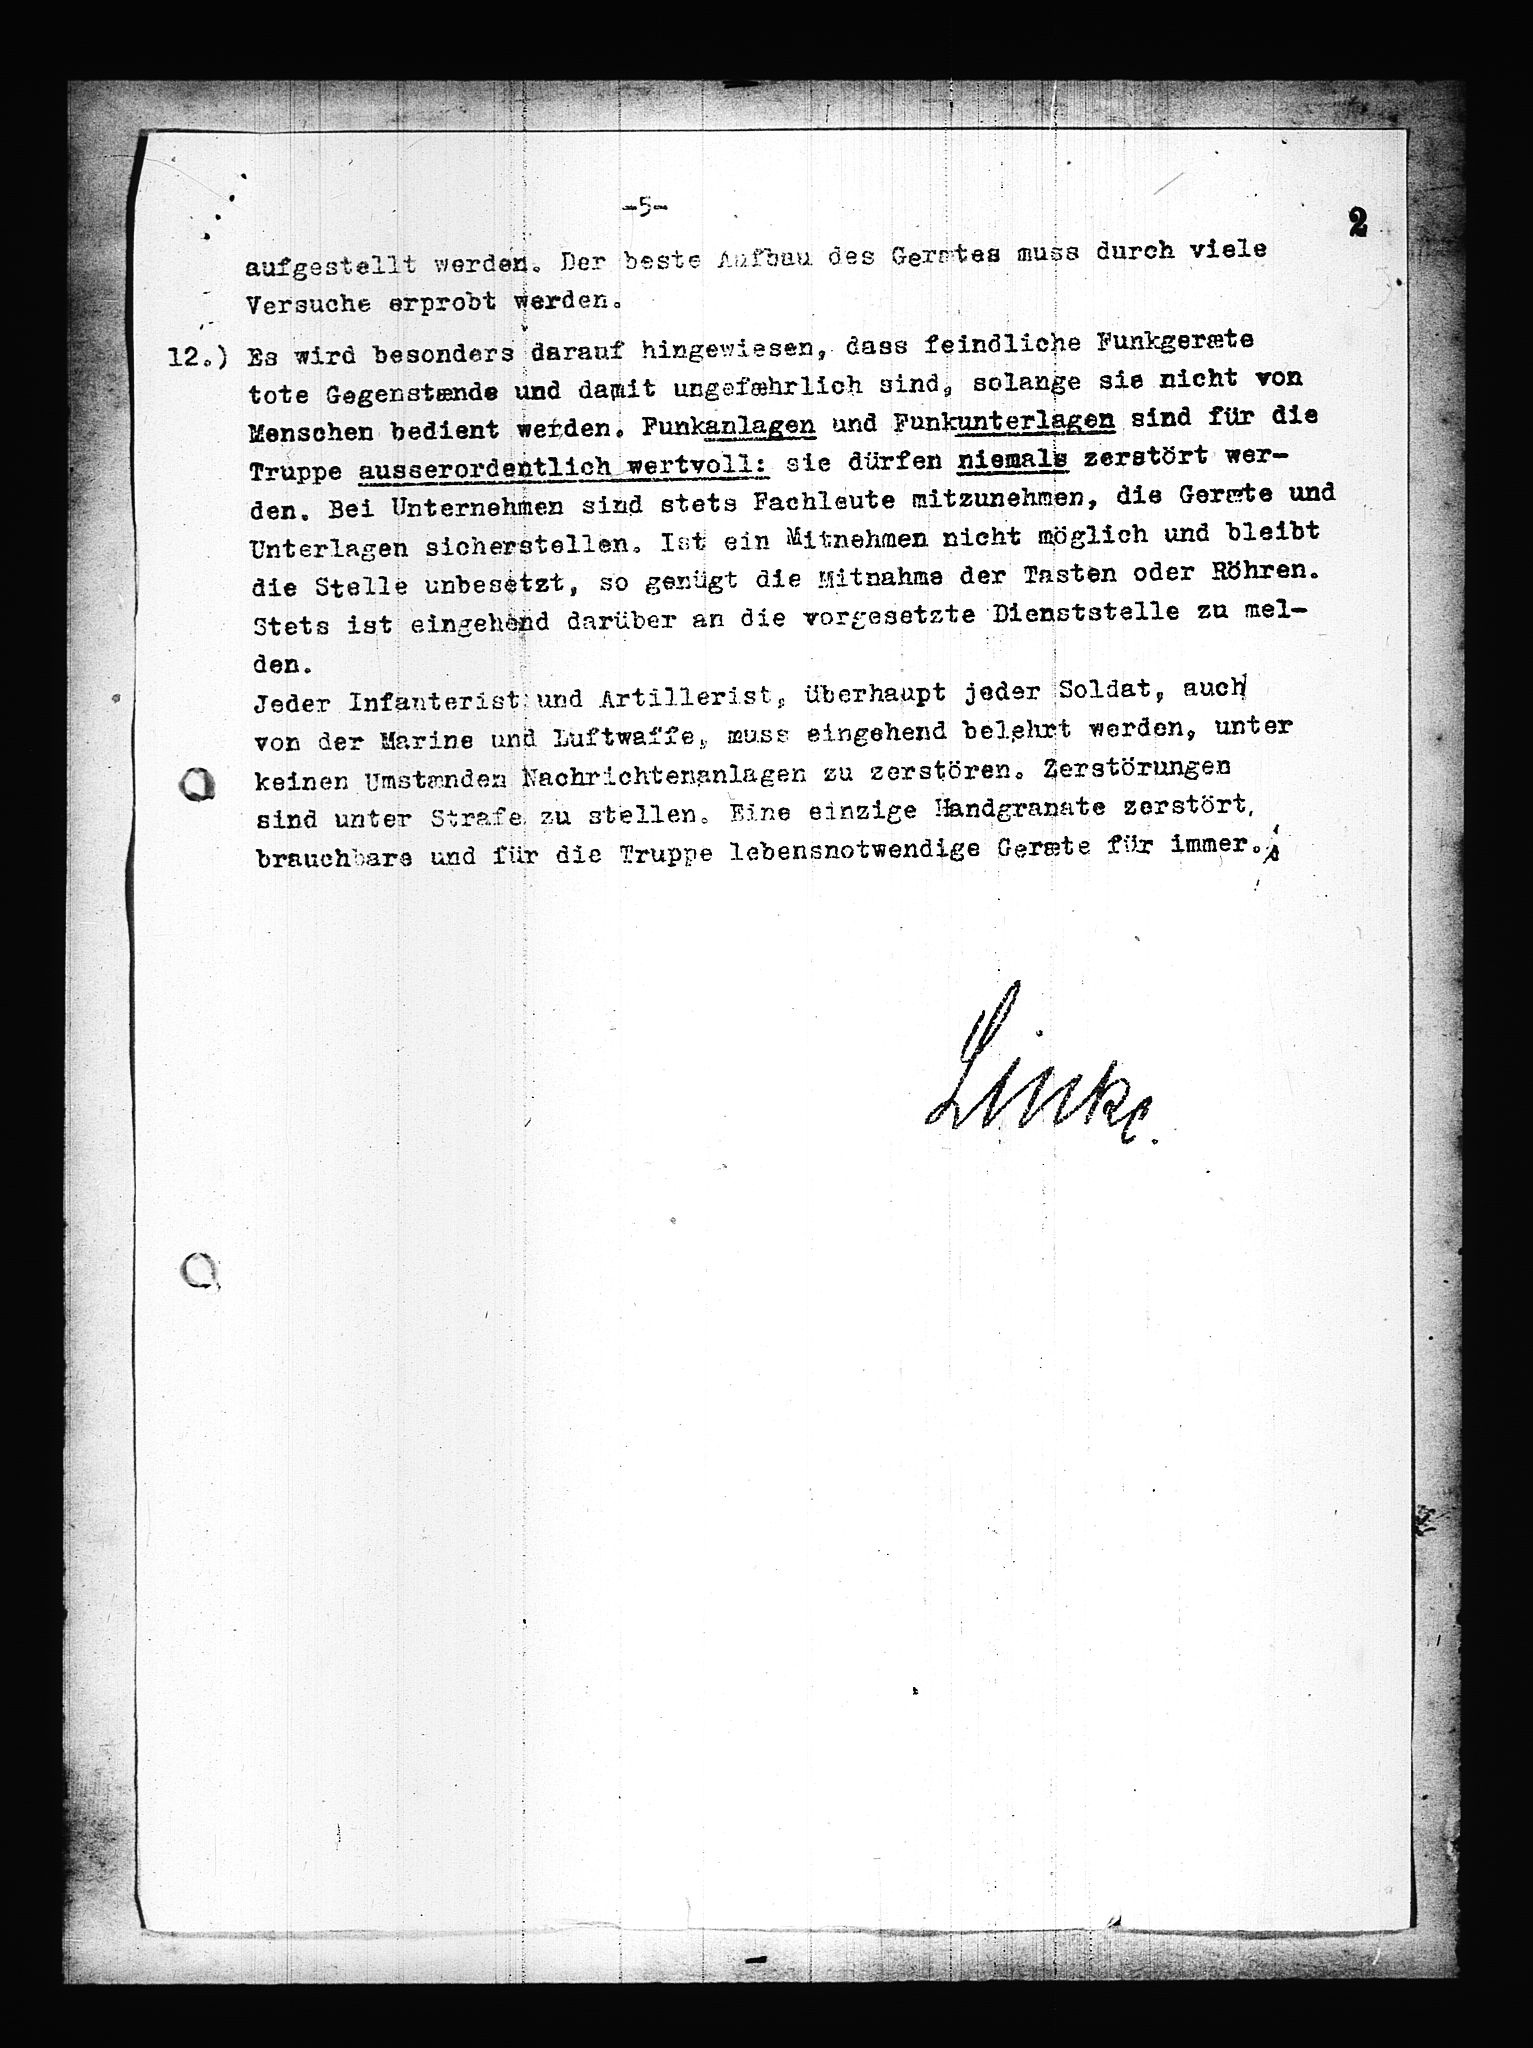 Documents Section, RA/RAFA-2200/V/L0082: Amerikansk mikrofilm "Captured German Documents".
Box No. 721.  FKA jnr. 619/1954., 1940, p. 508